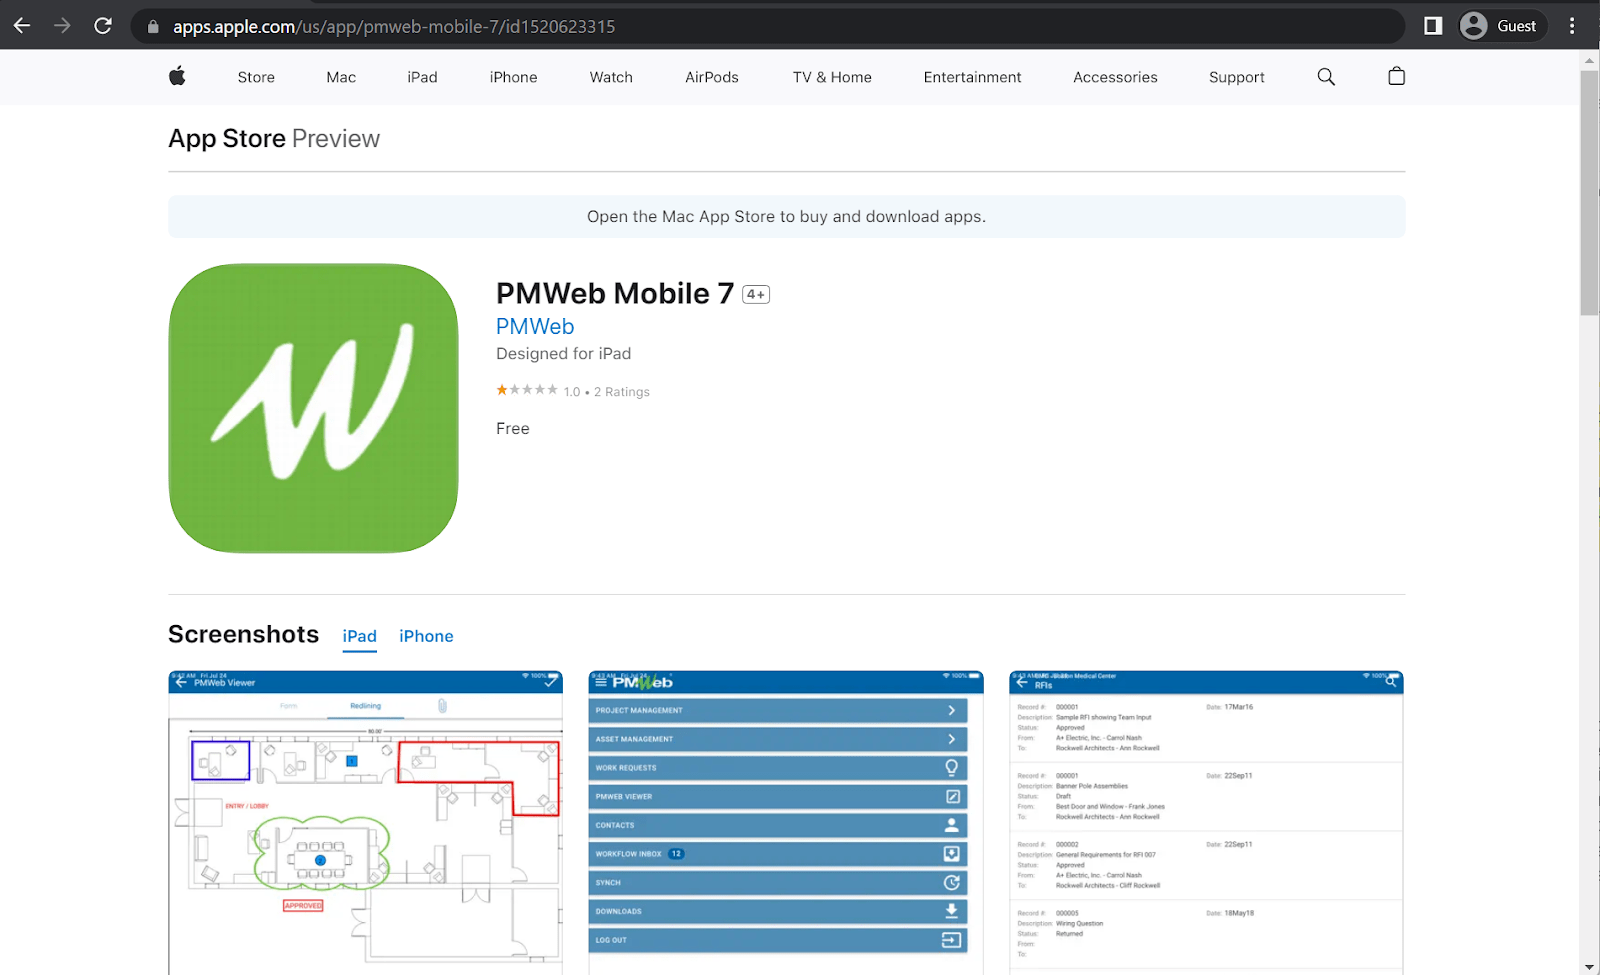 pmweb mobile 7 app store page